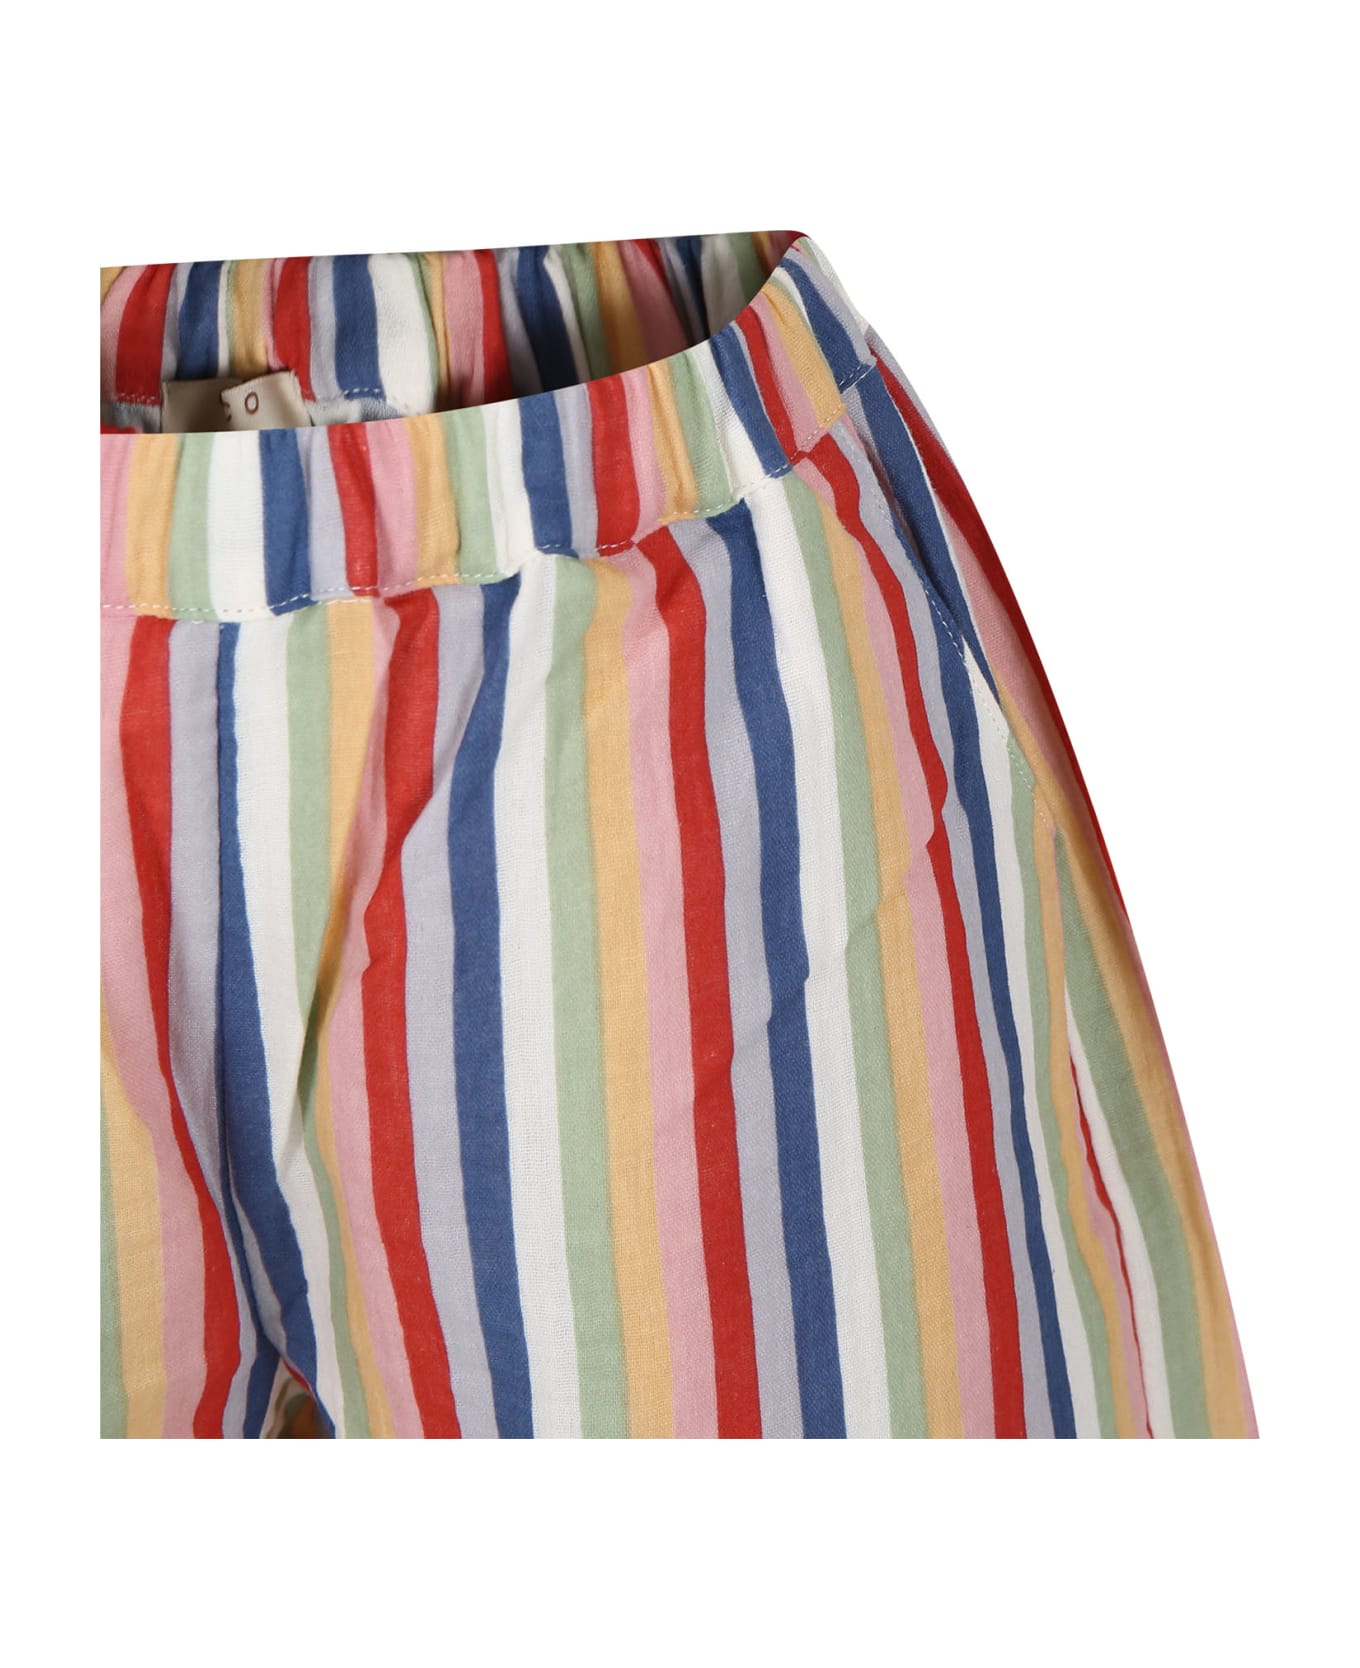 Coco Au Lait Multicolor Shorts For Kidswith Stripes Pattern - Multicolor